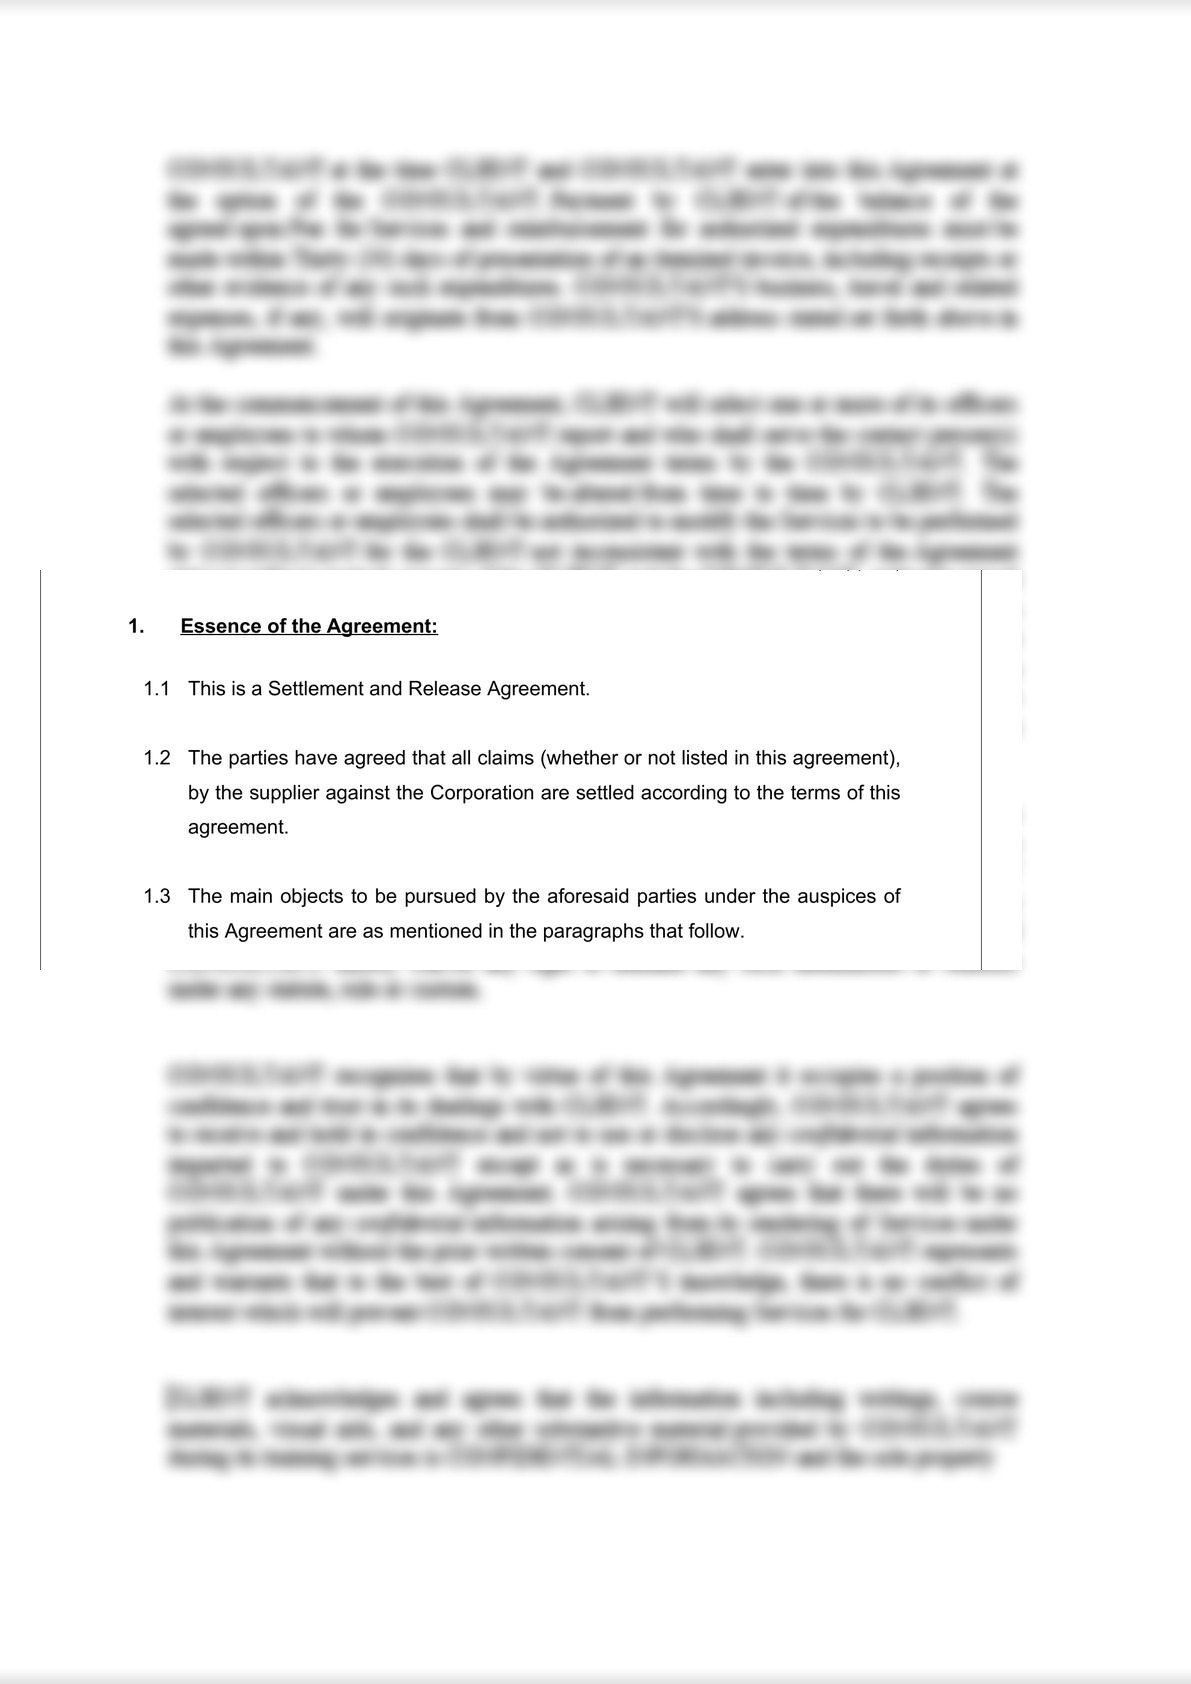 Settlement & Release Agreement-2